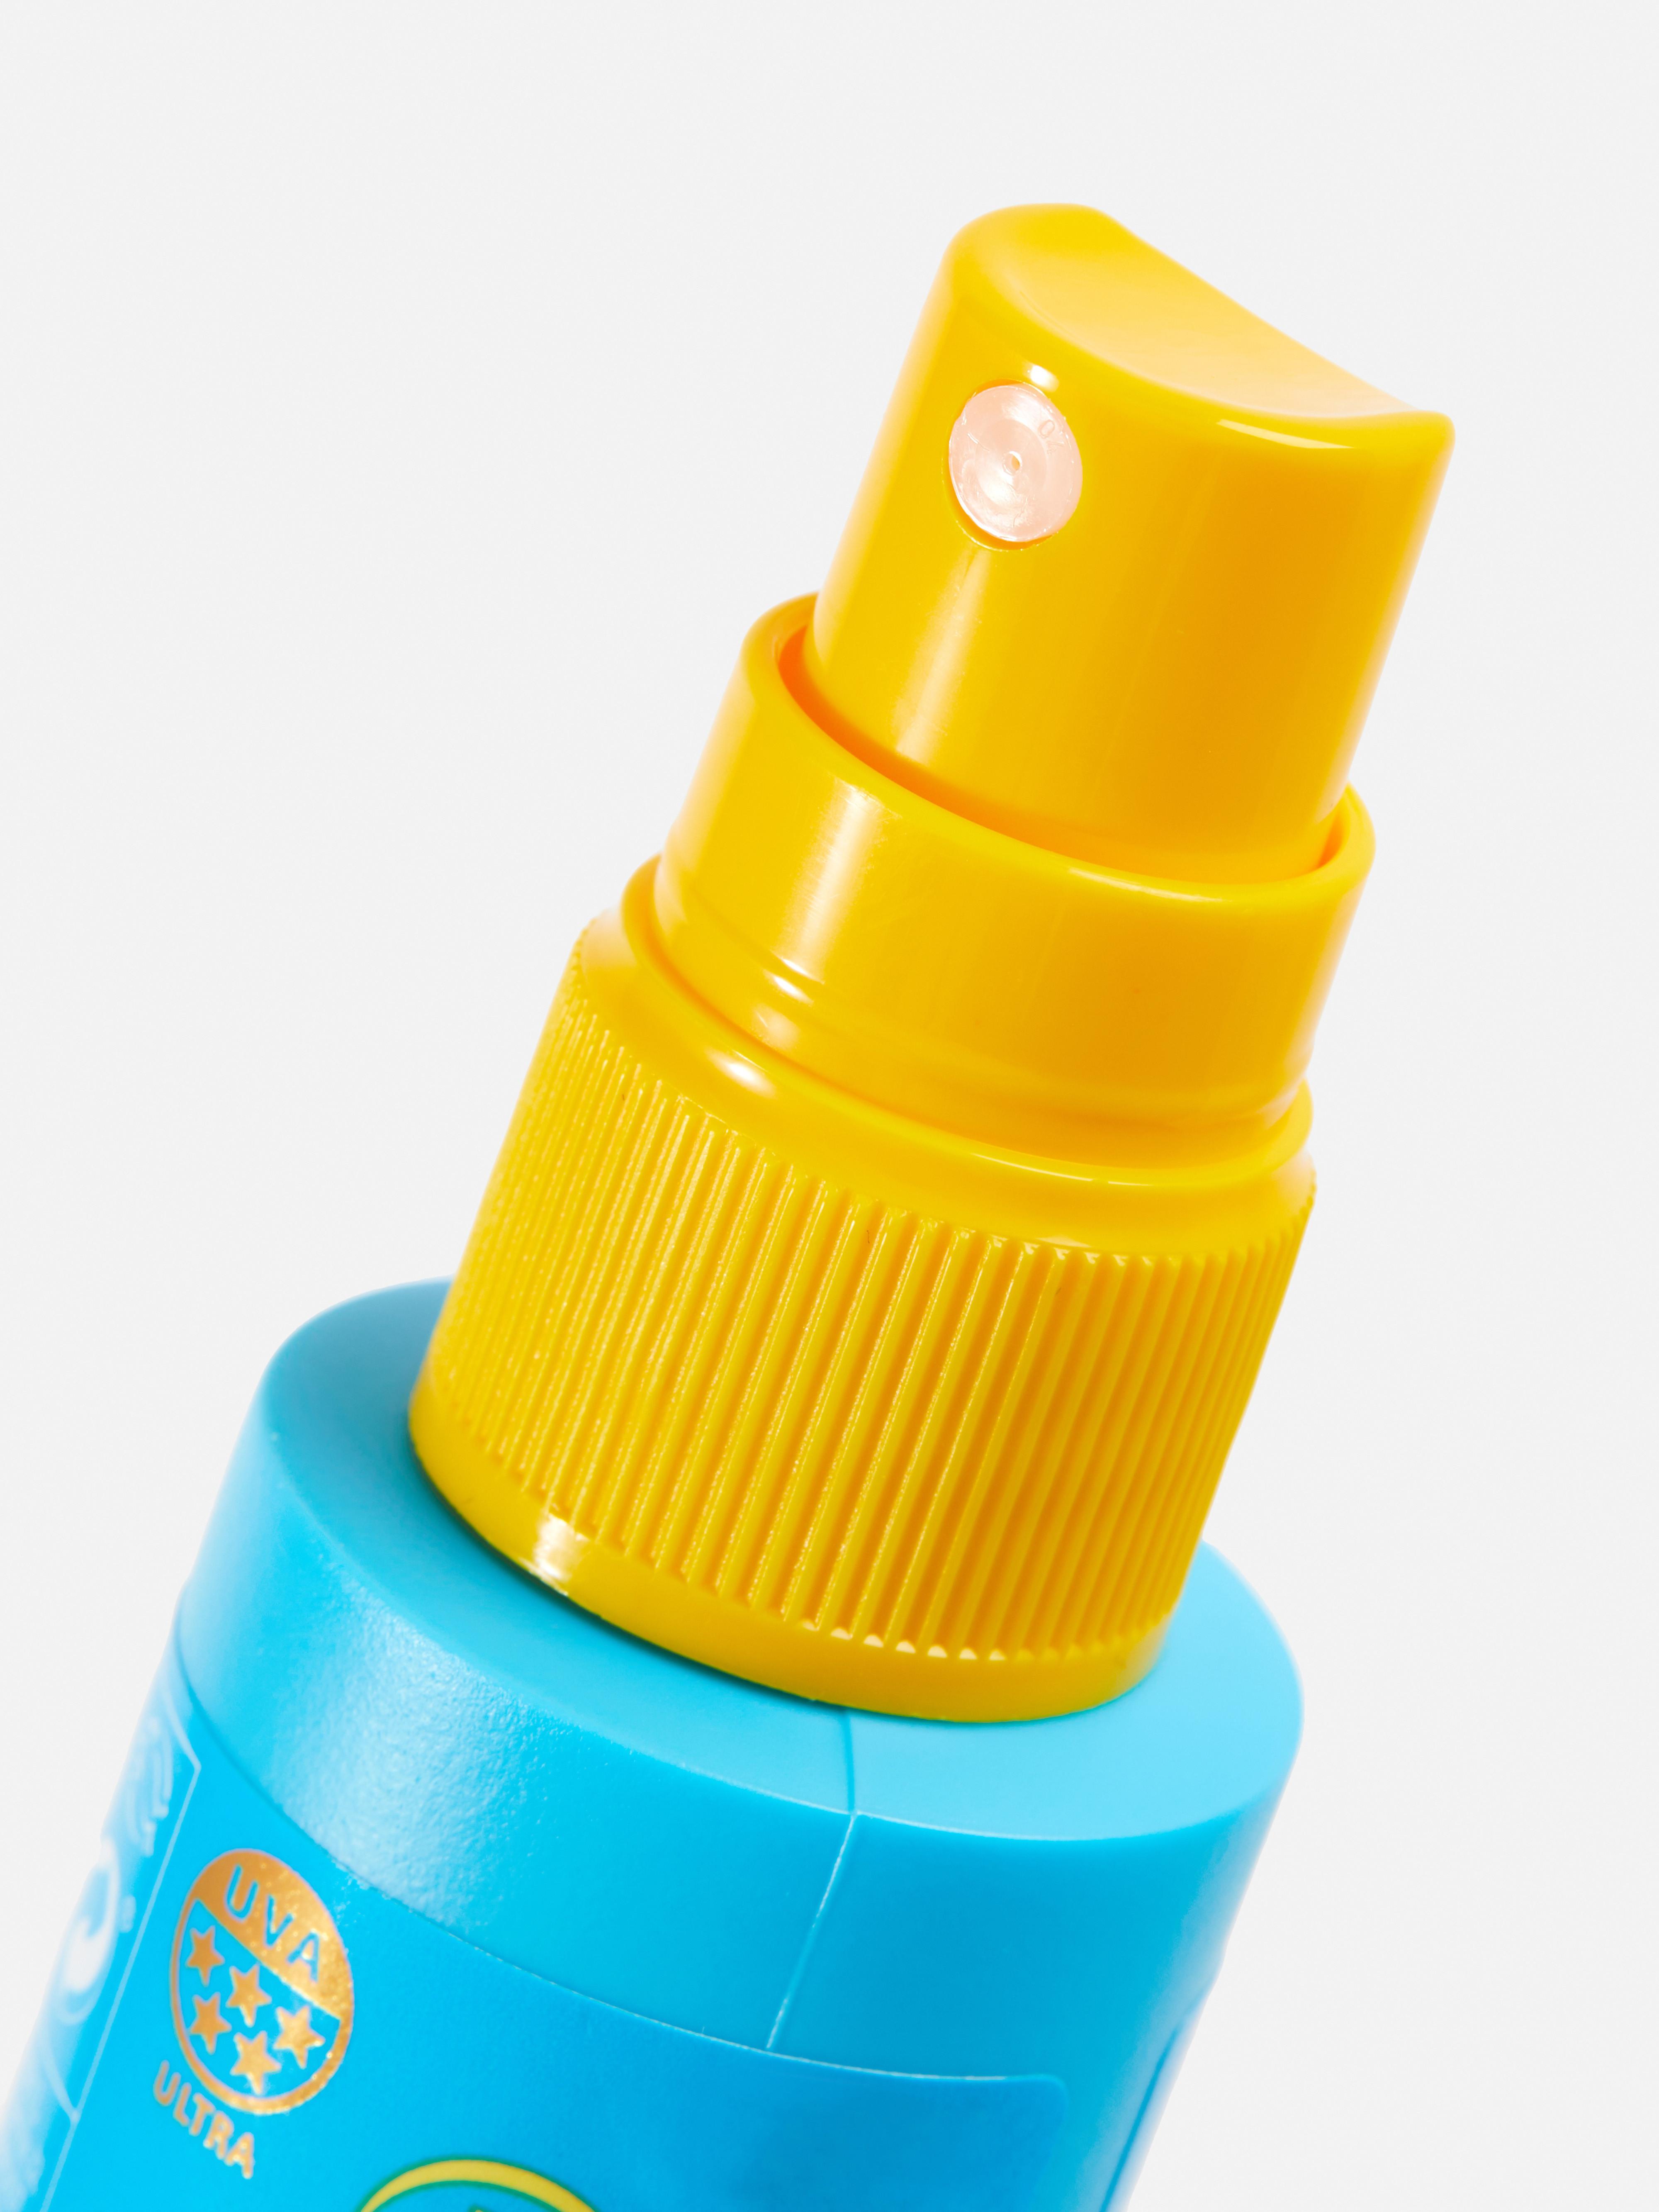 SPF30 Mini Sun Protect Spray